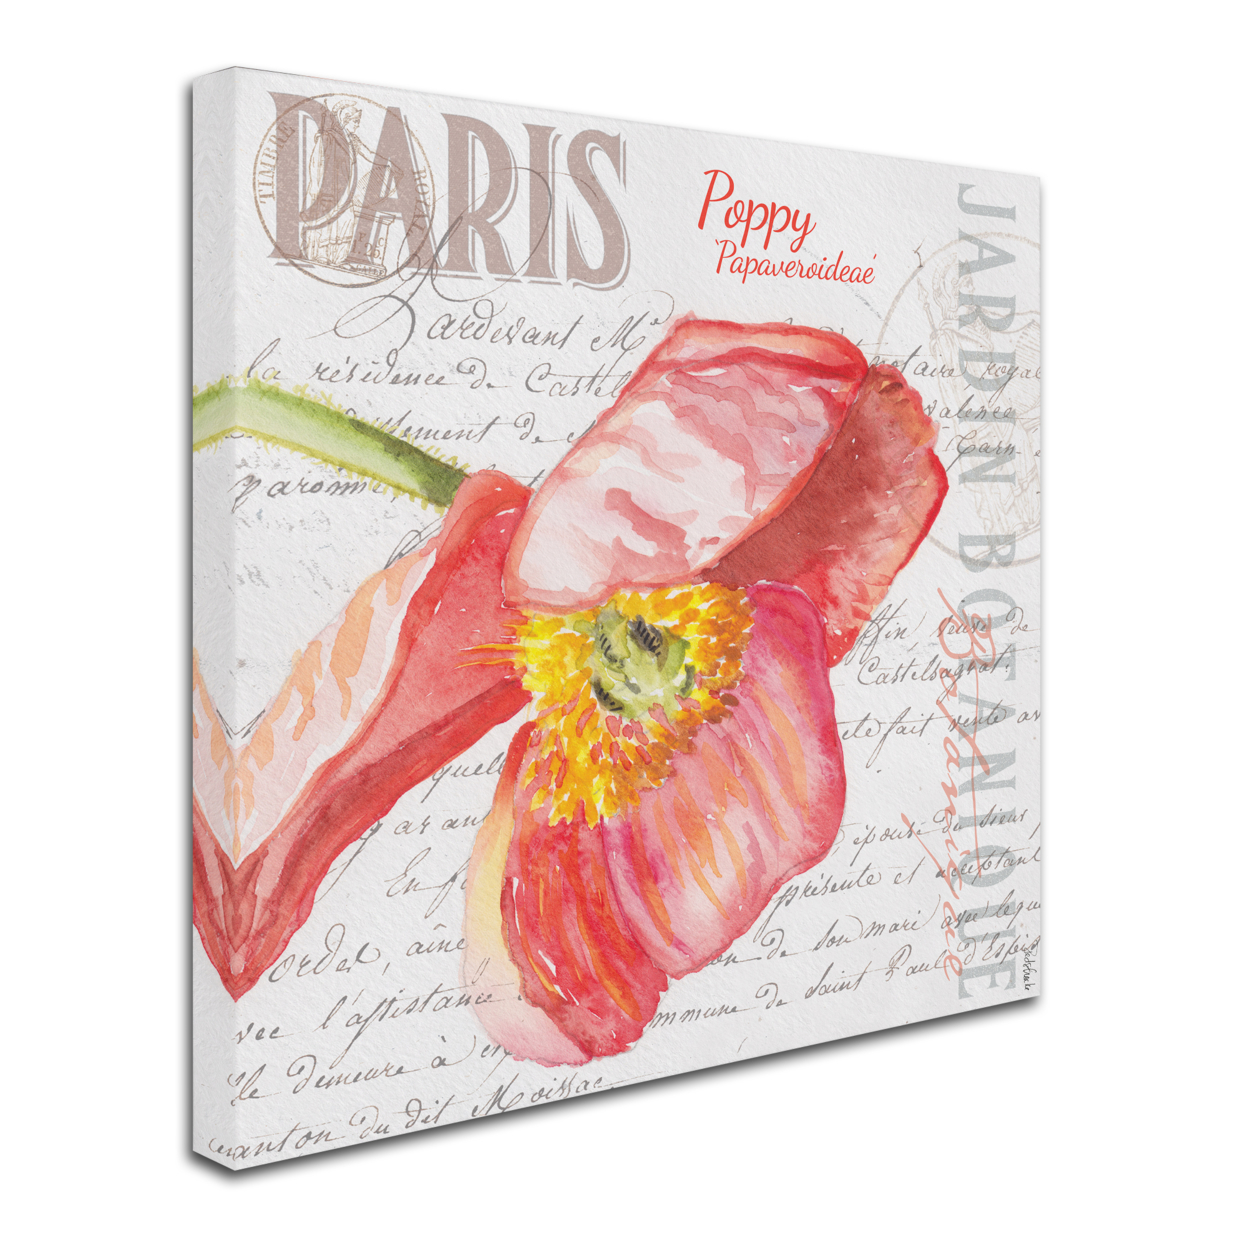 Jennifer Redstreake 'Paris Botanique Red Poppy' Huge Canvas Art 35 X 35